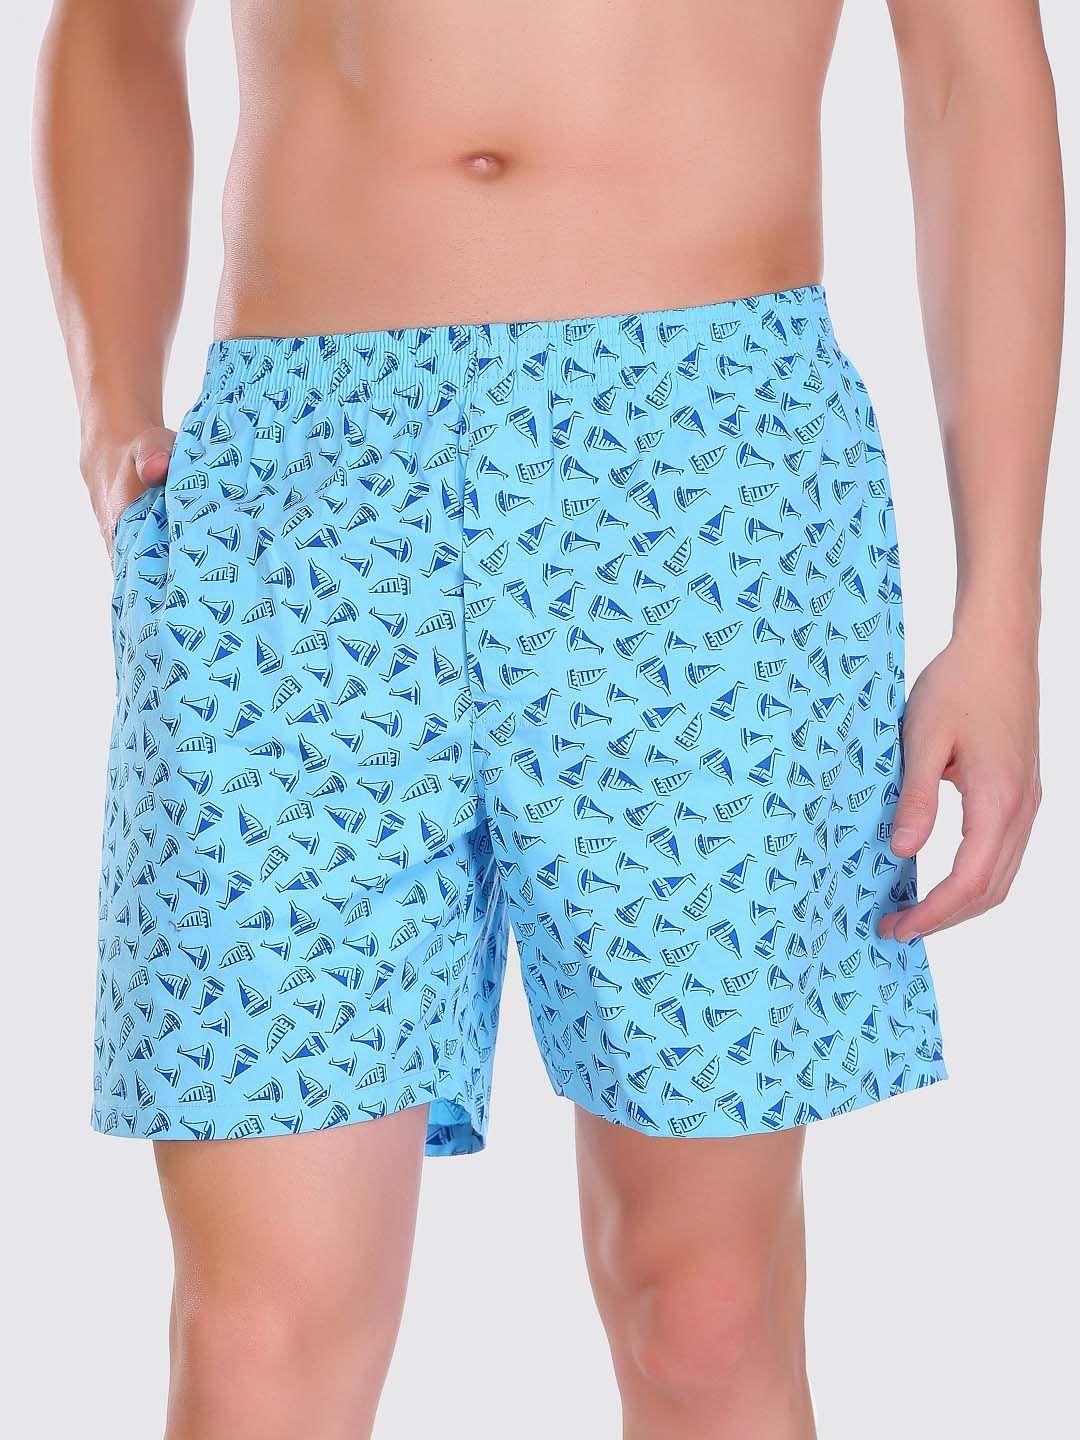 hiflyers-men-blue-floral-printed-shorts